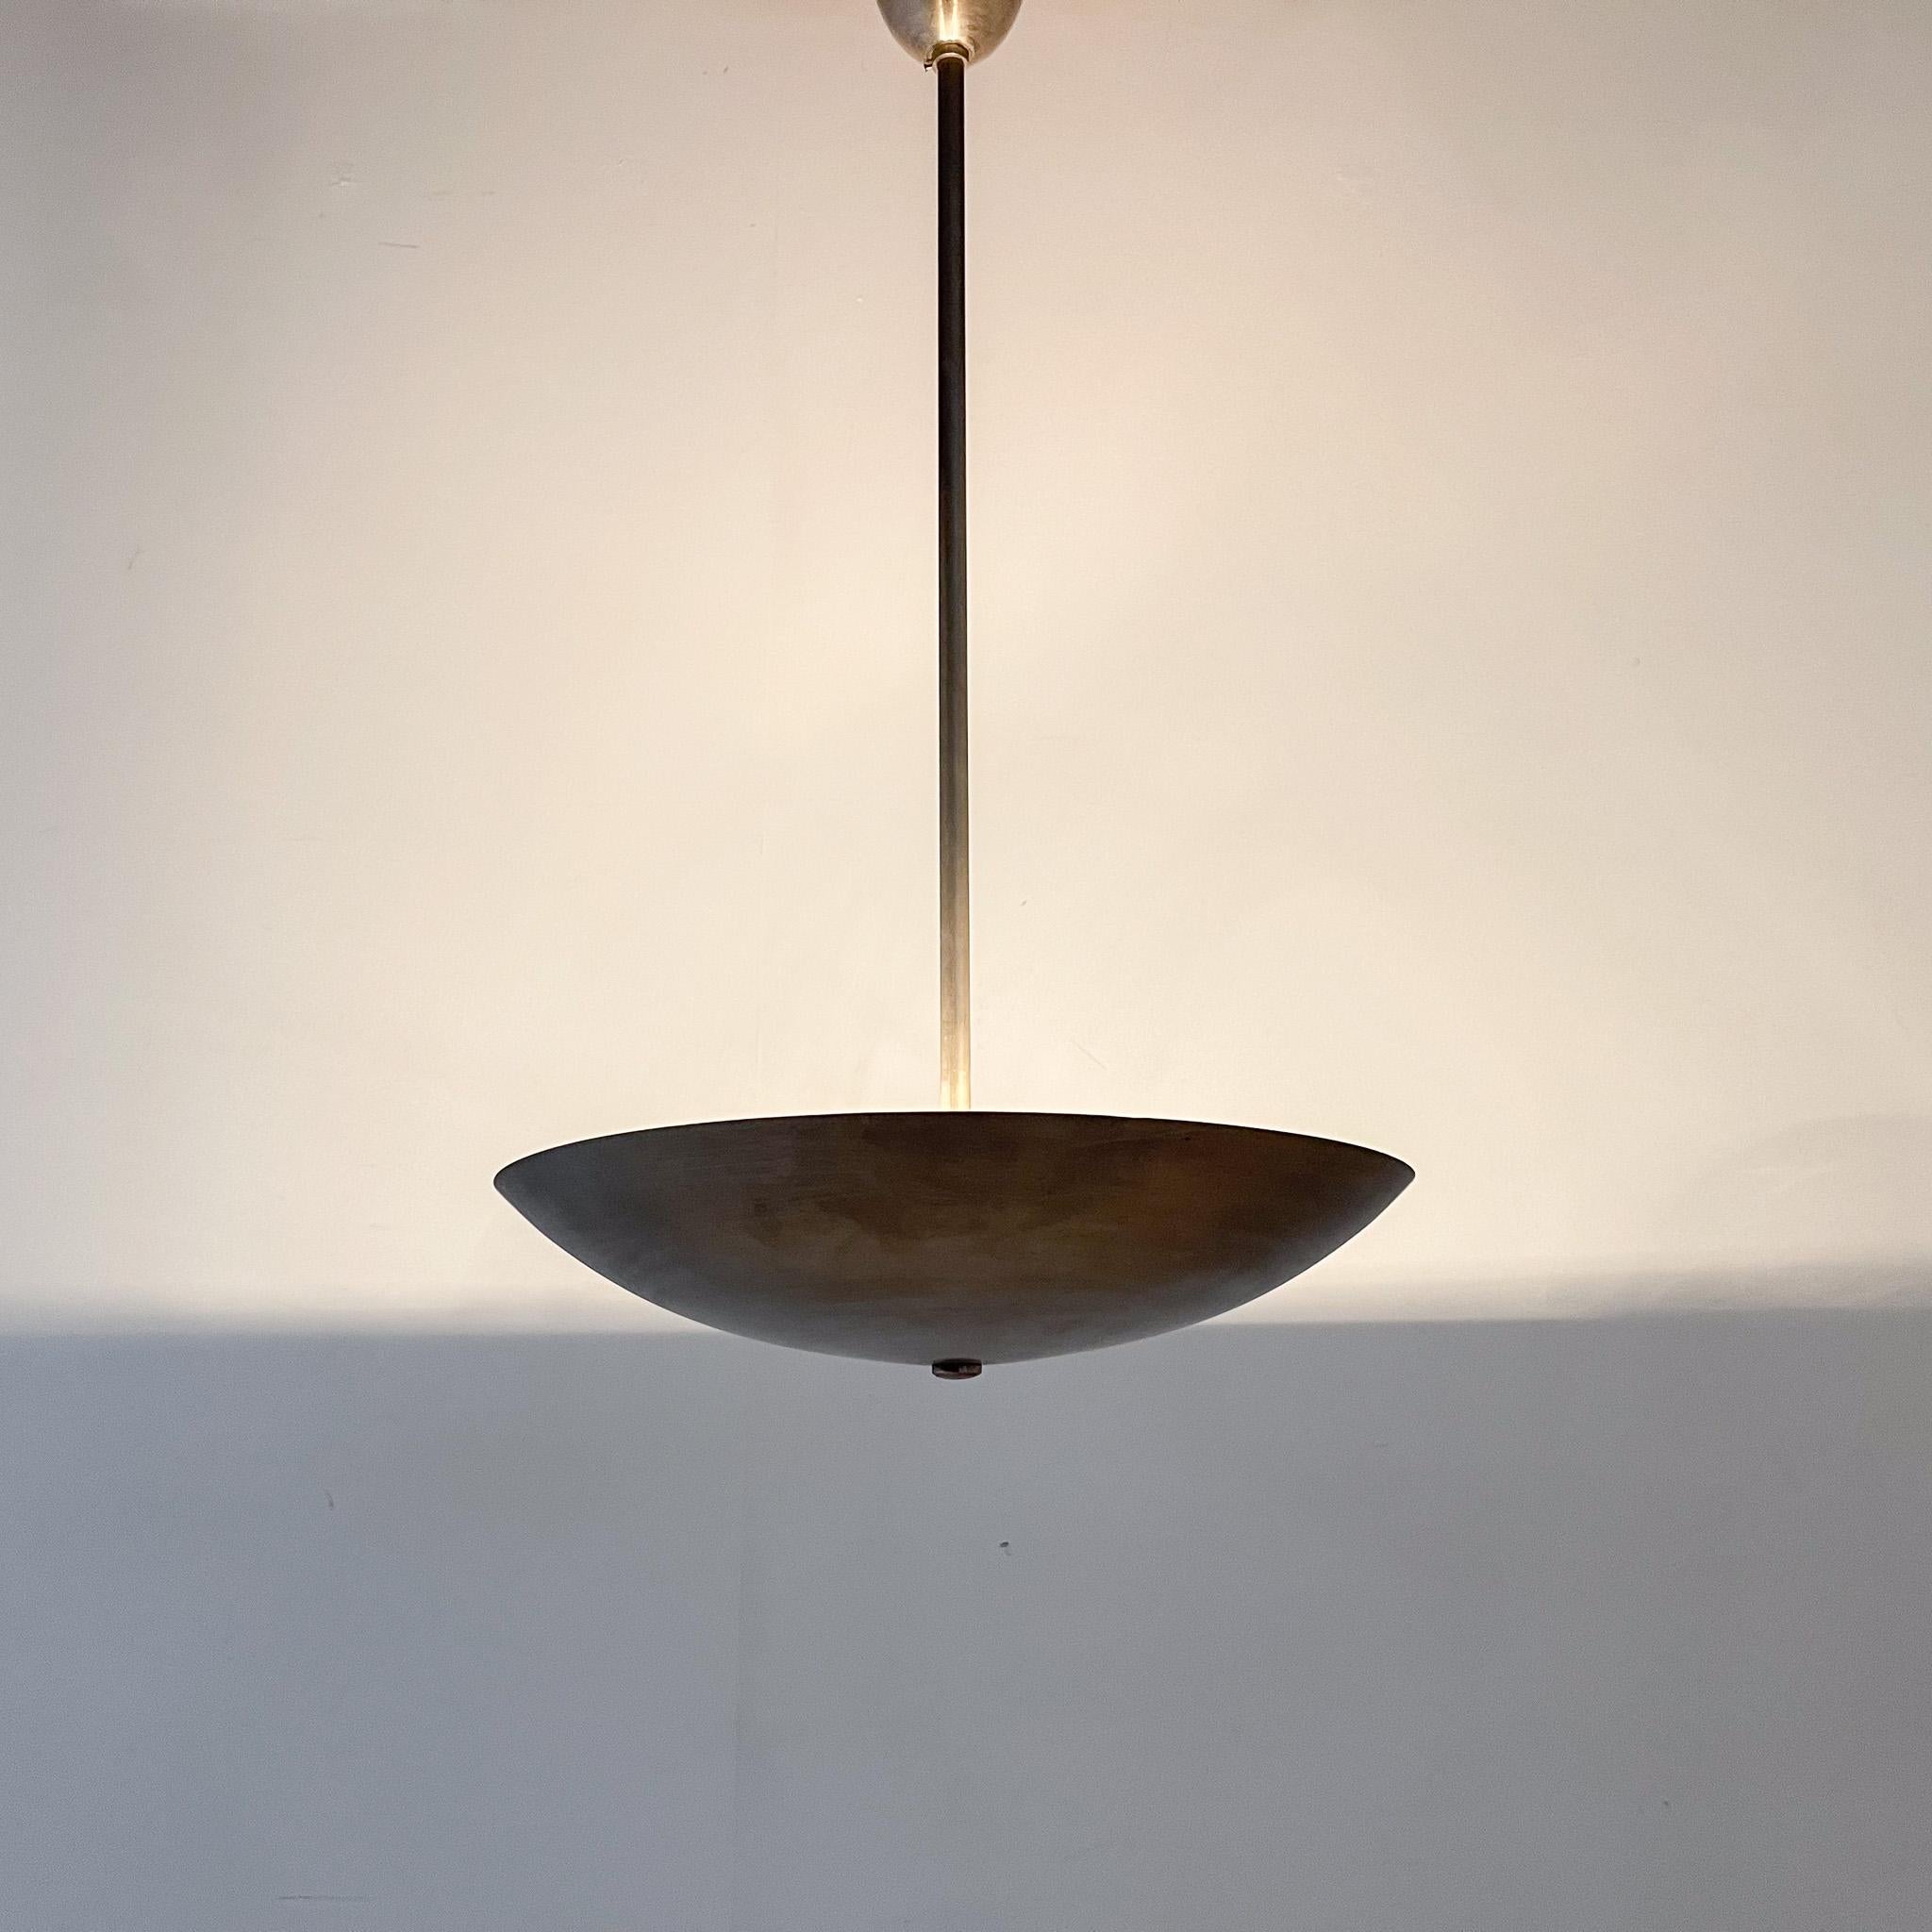 1930's Chrome Pendant Light by Designer Franta Anyz, Czechoslovakia In Good Condition For Sale In Praha, CZ